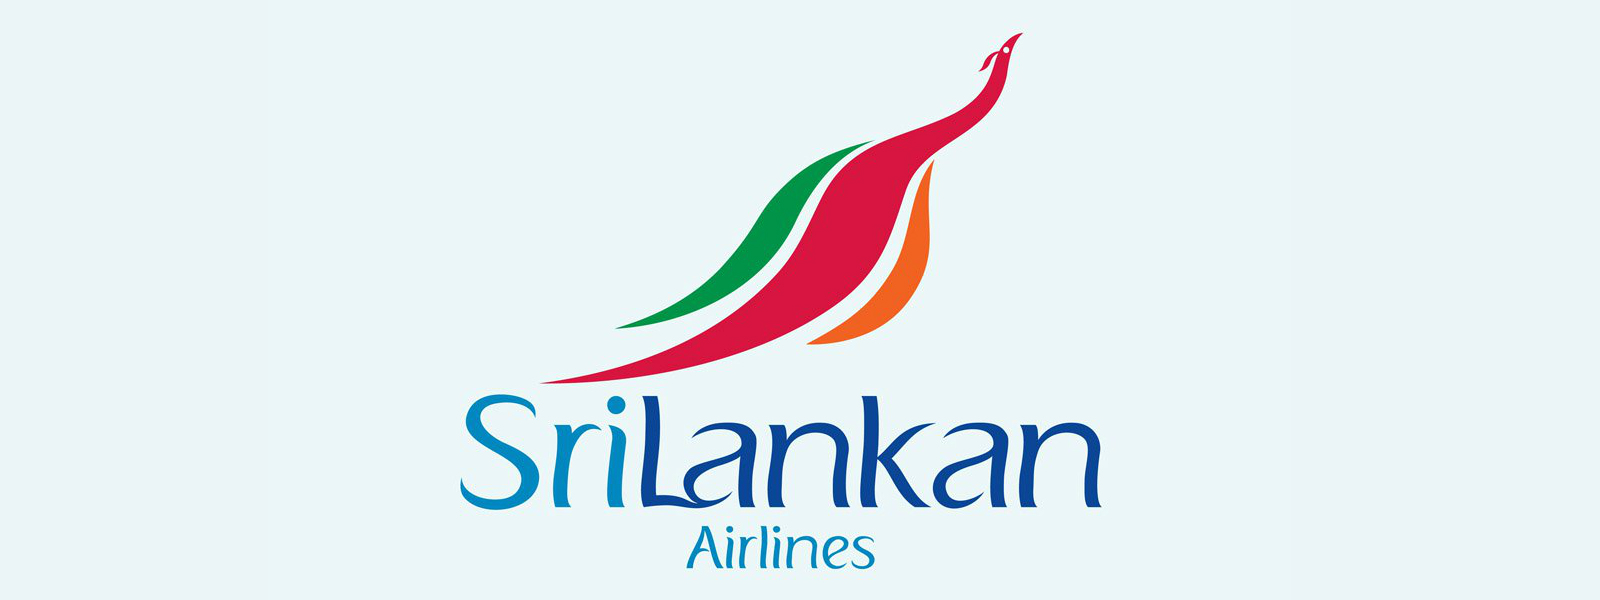 Sri Lankan wins ‘Leading International Airline'